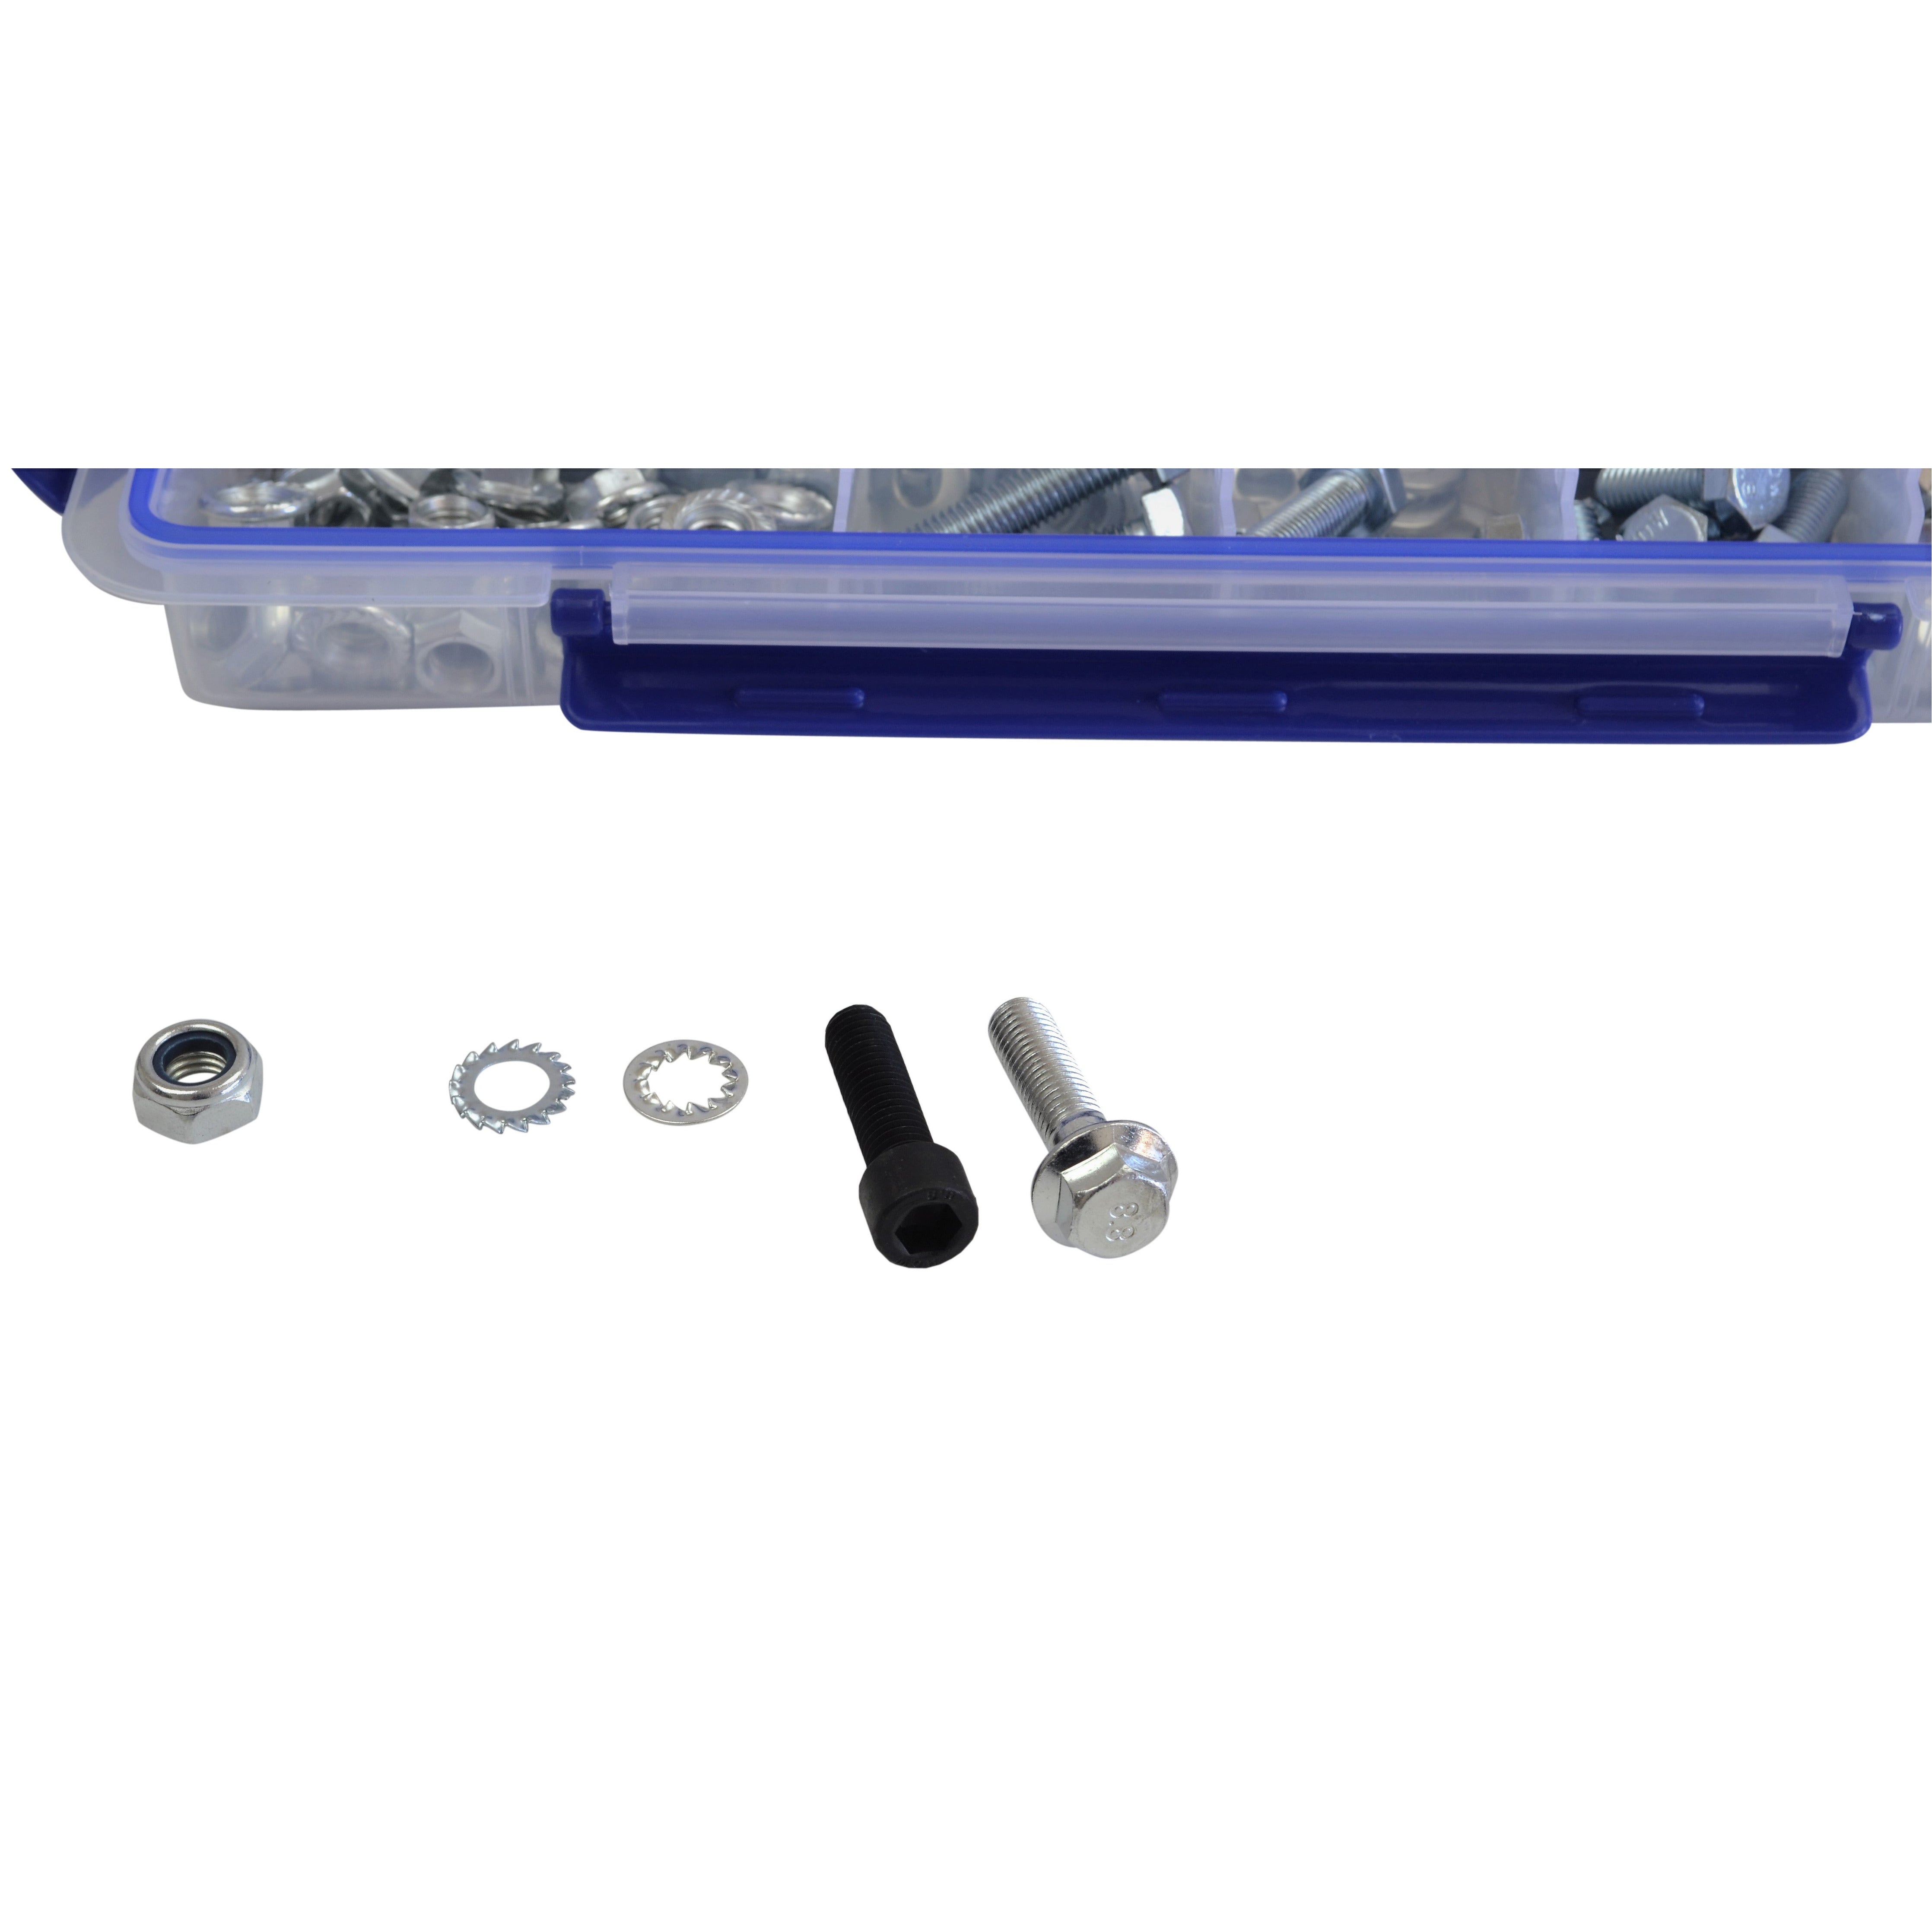 401 pc high tensile cap screw flange head bolt nut washer grab kit assortment M10 industrial fastners hardware